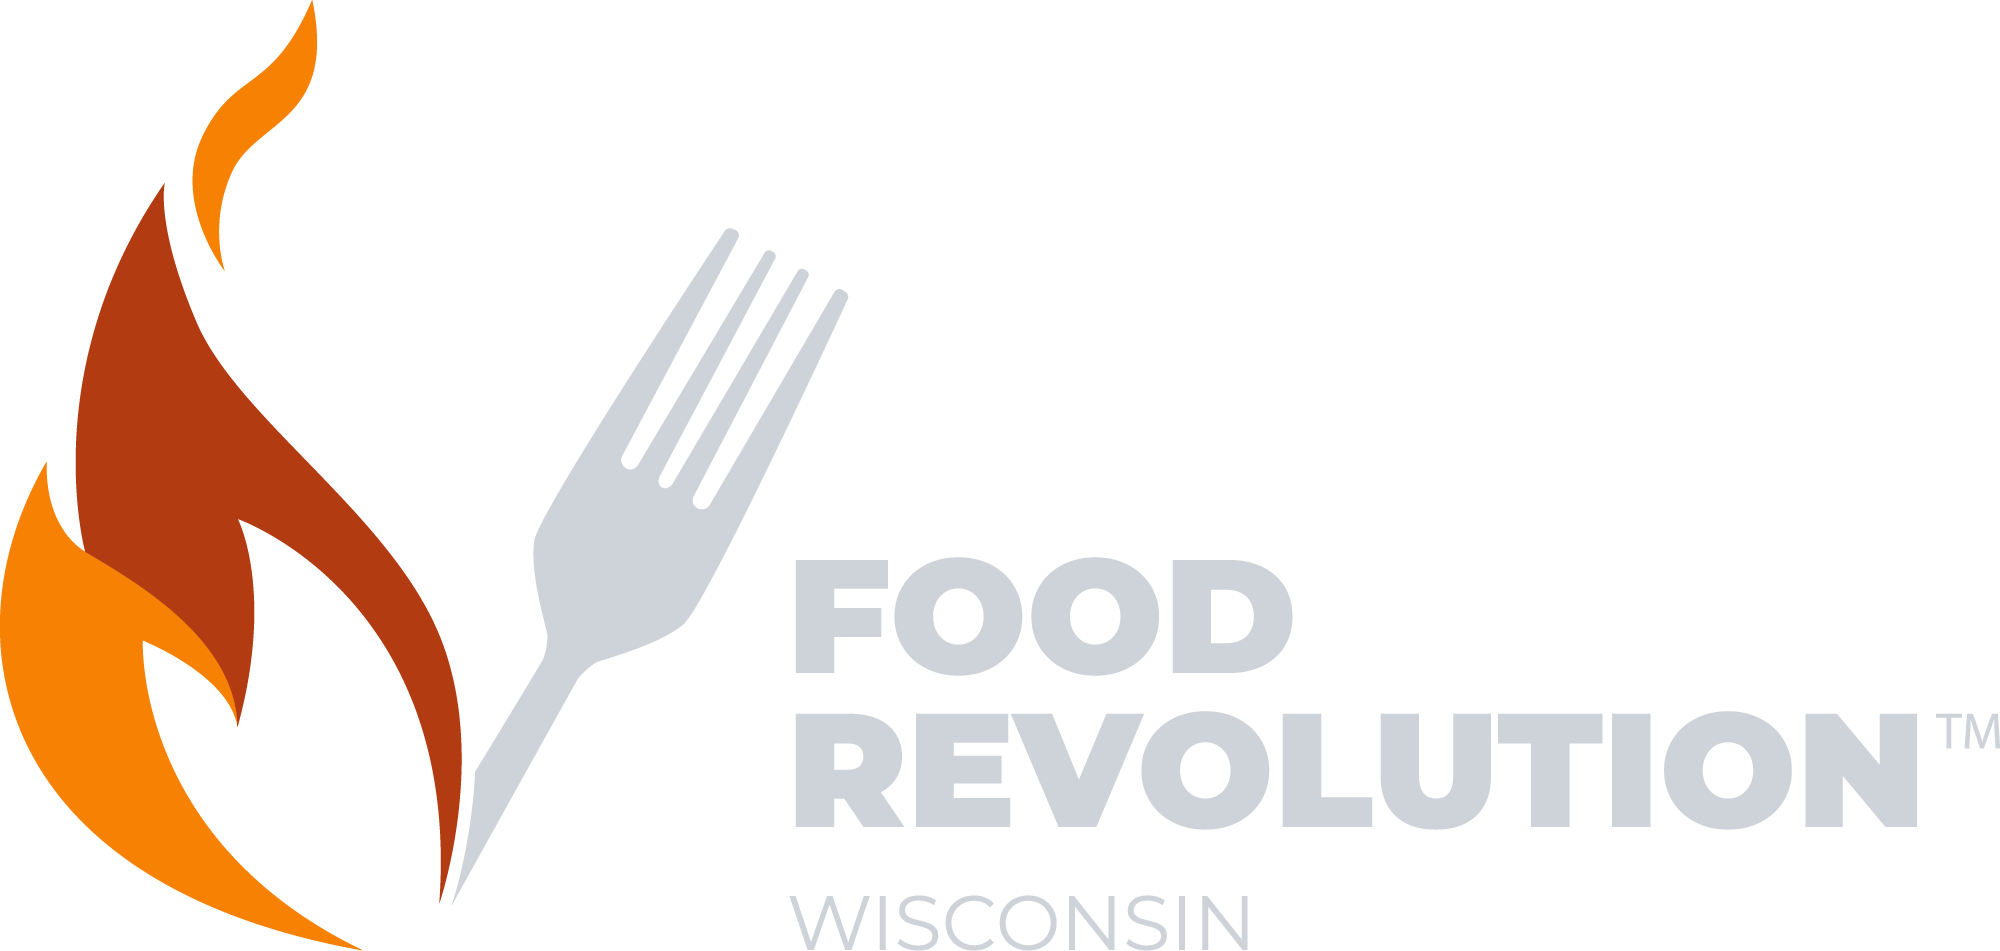 FOOD REVOLUTION WISCONSIN